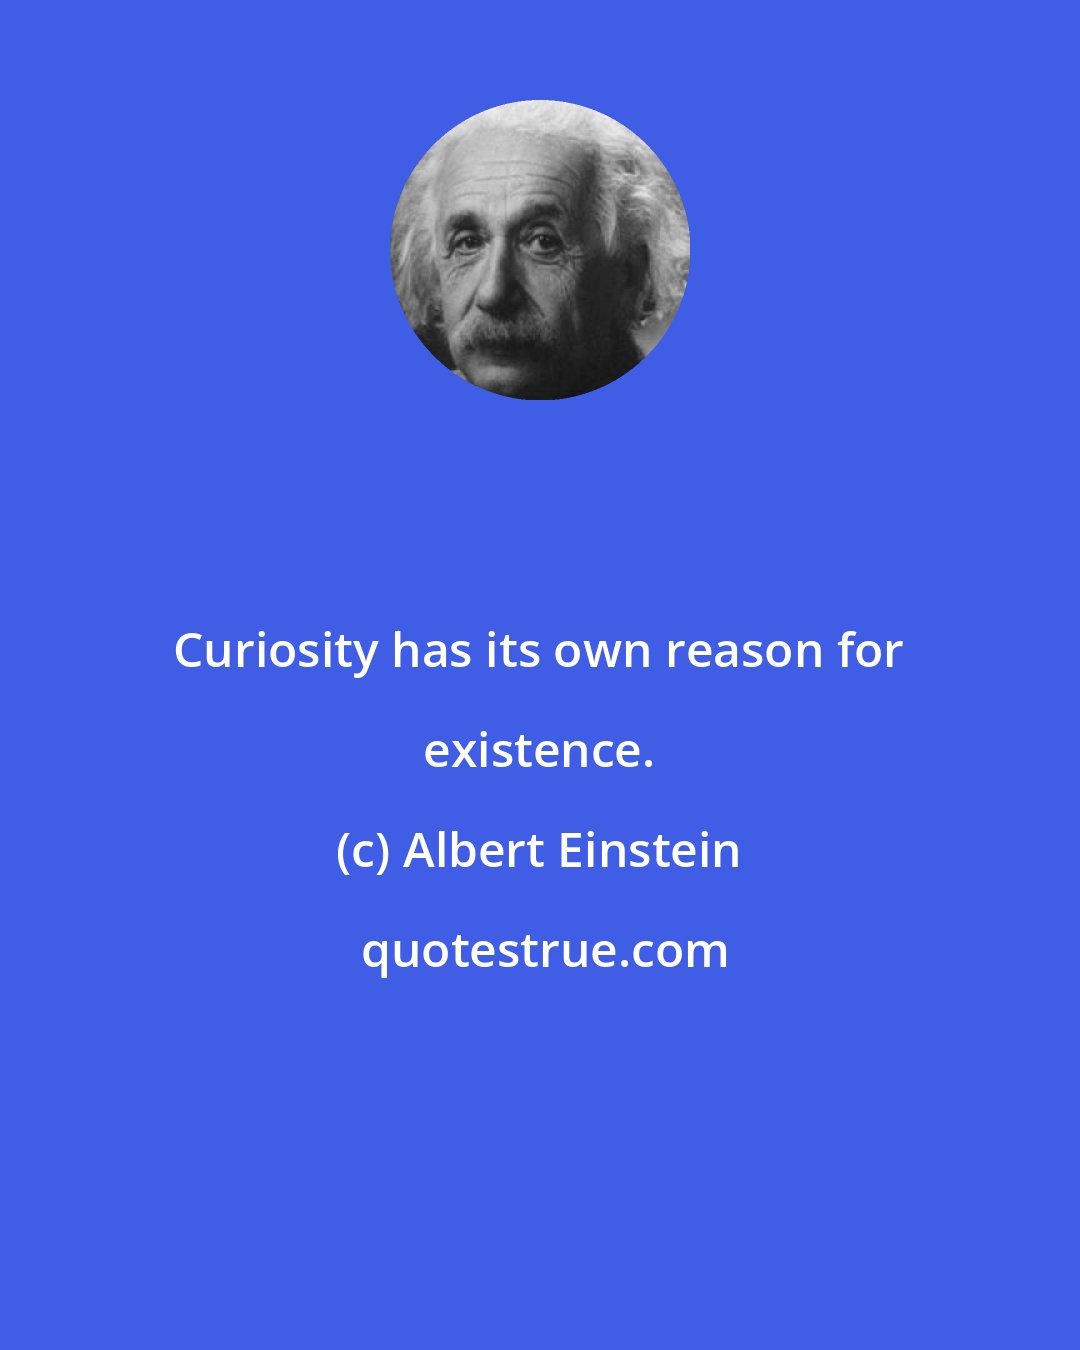 Albert Einstein: Curiosity has its own reason for existence.